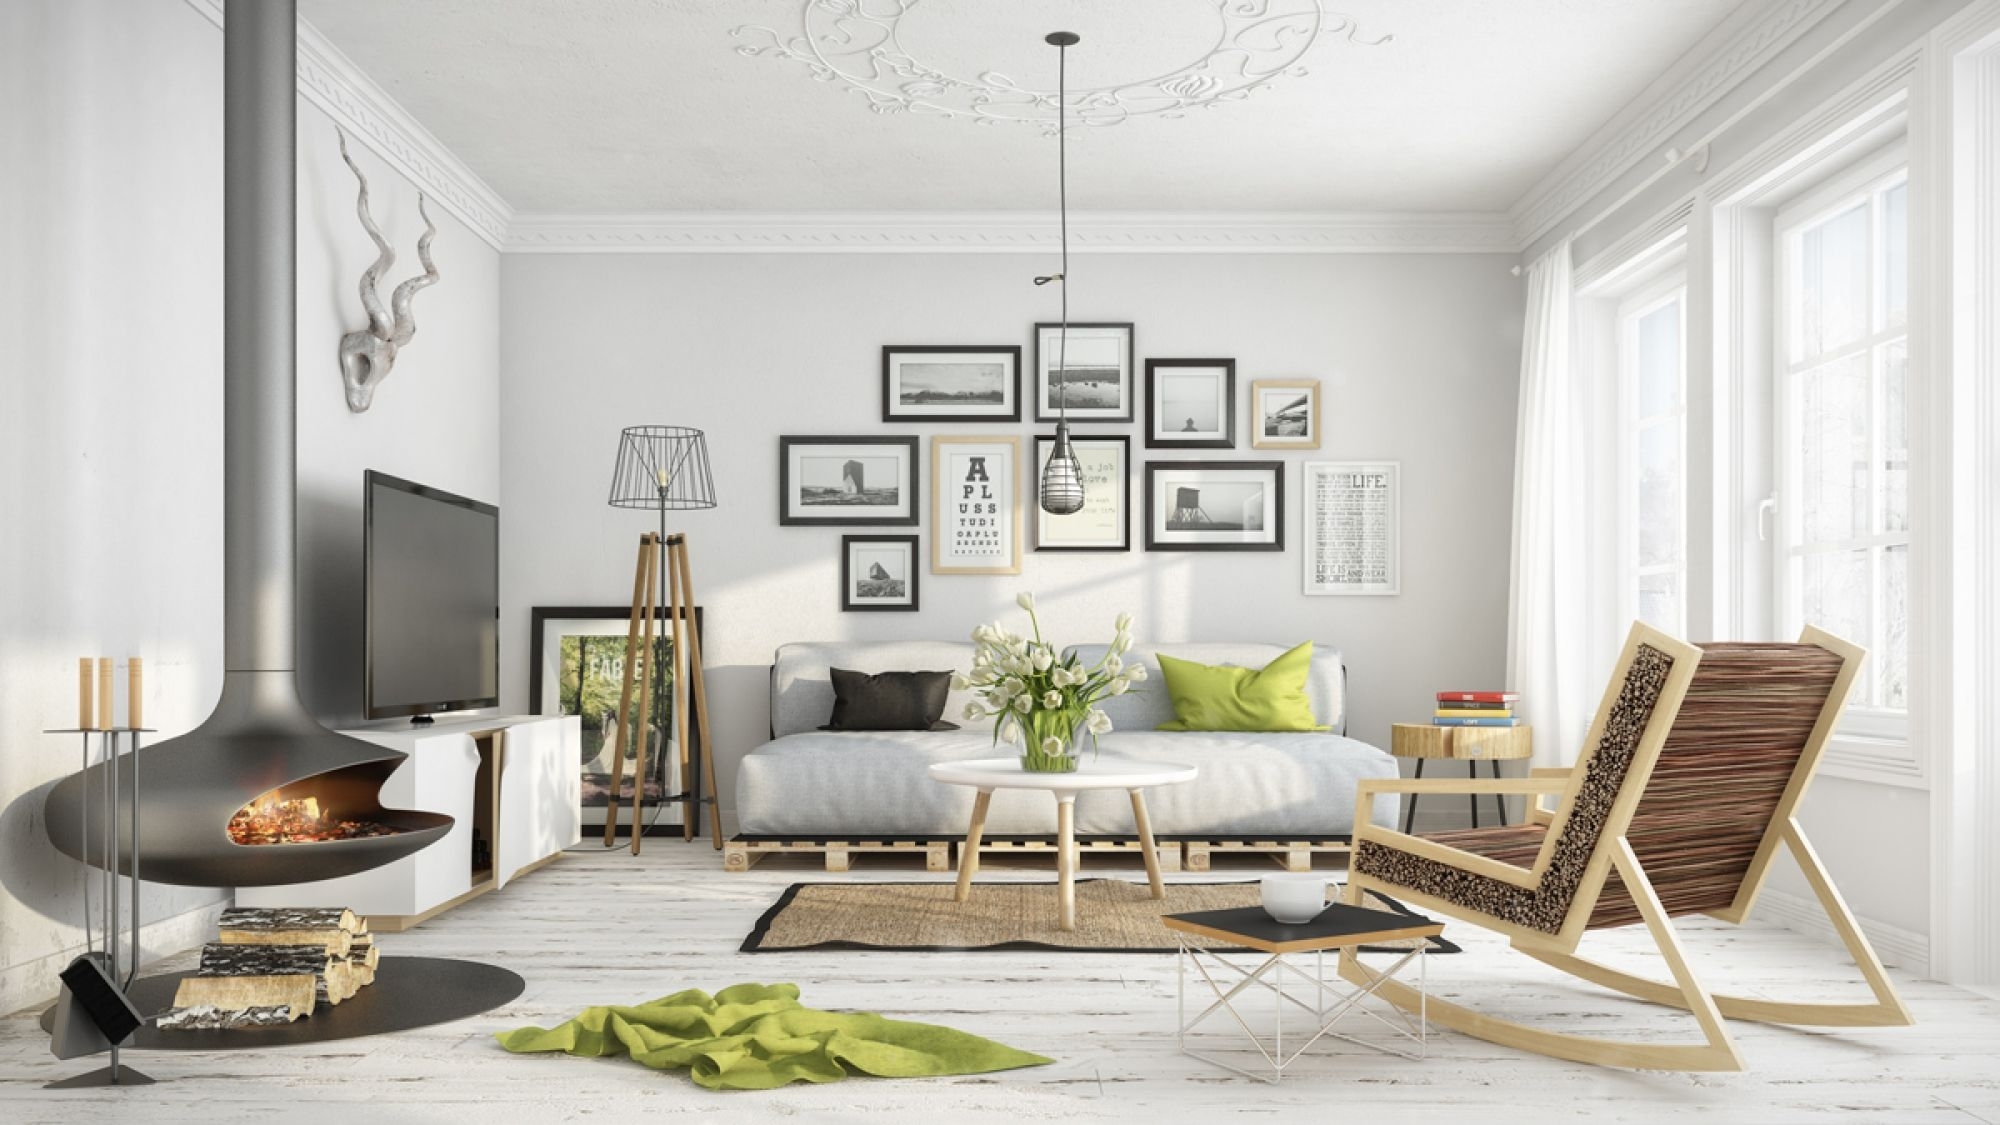 Inspirational Home Interior Design Styles